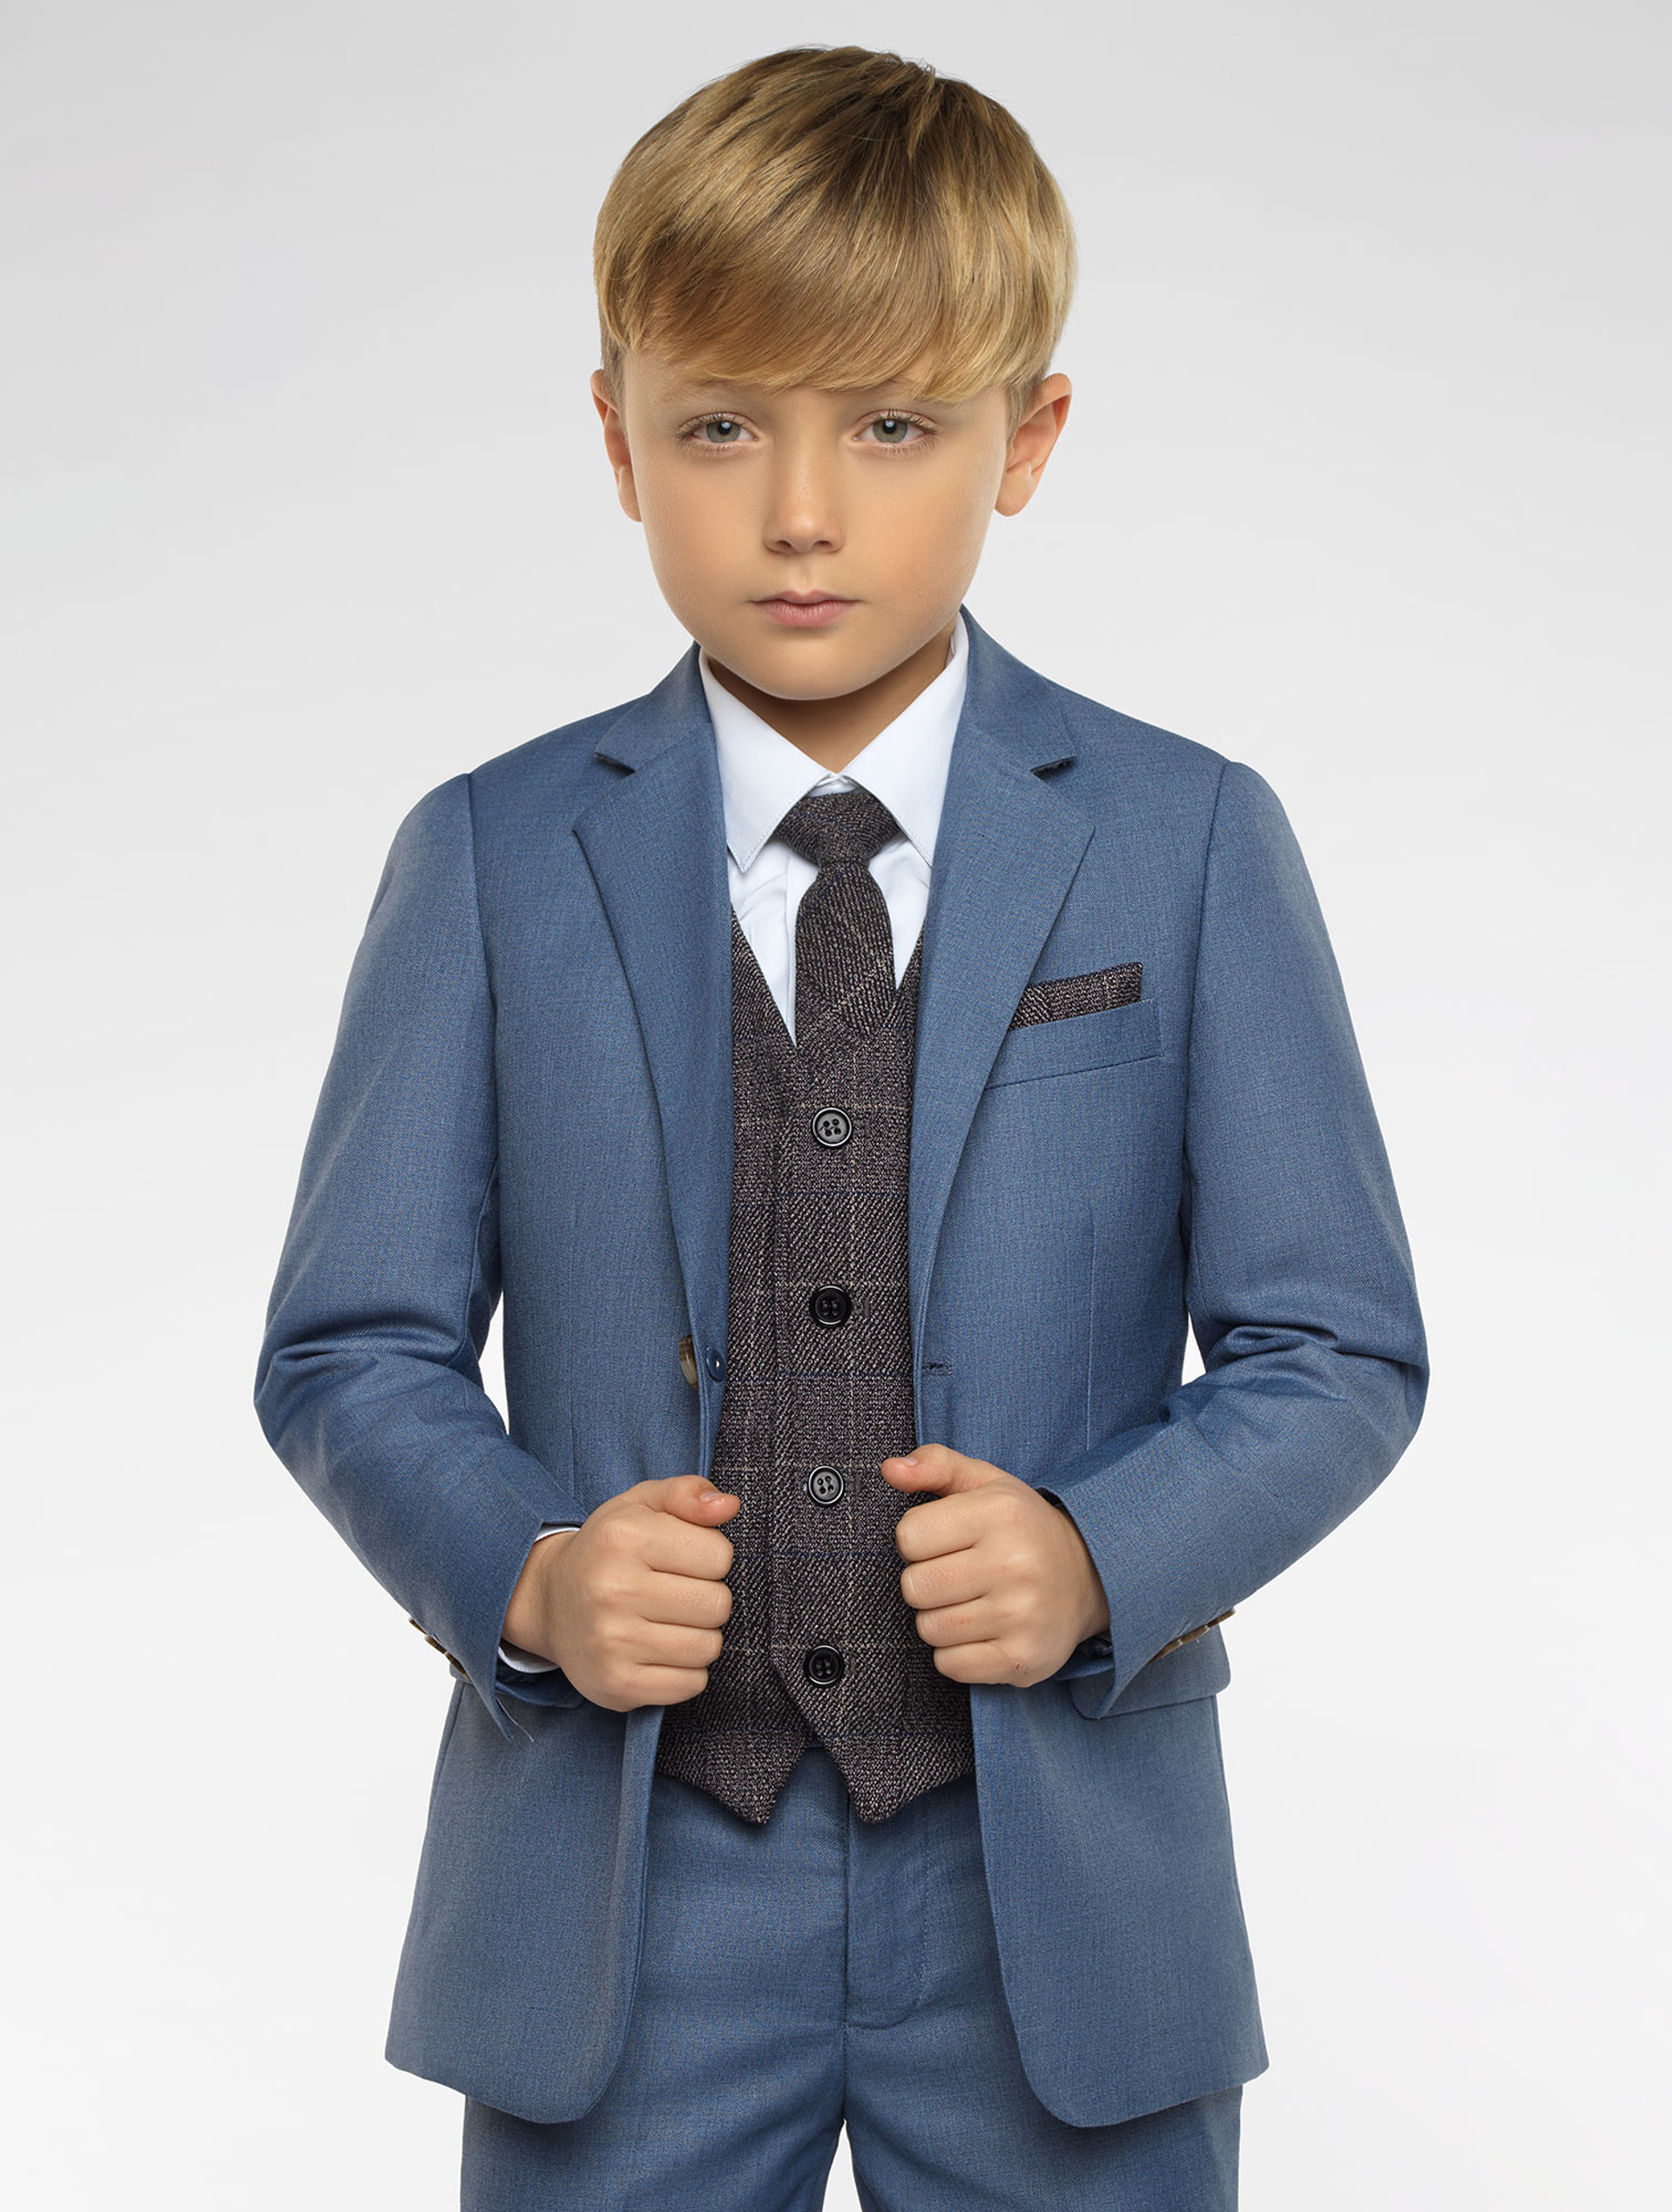 Boys chambray suit | Boys blue & grey suit | Sampson